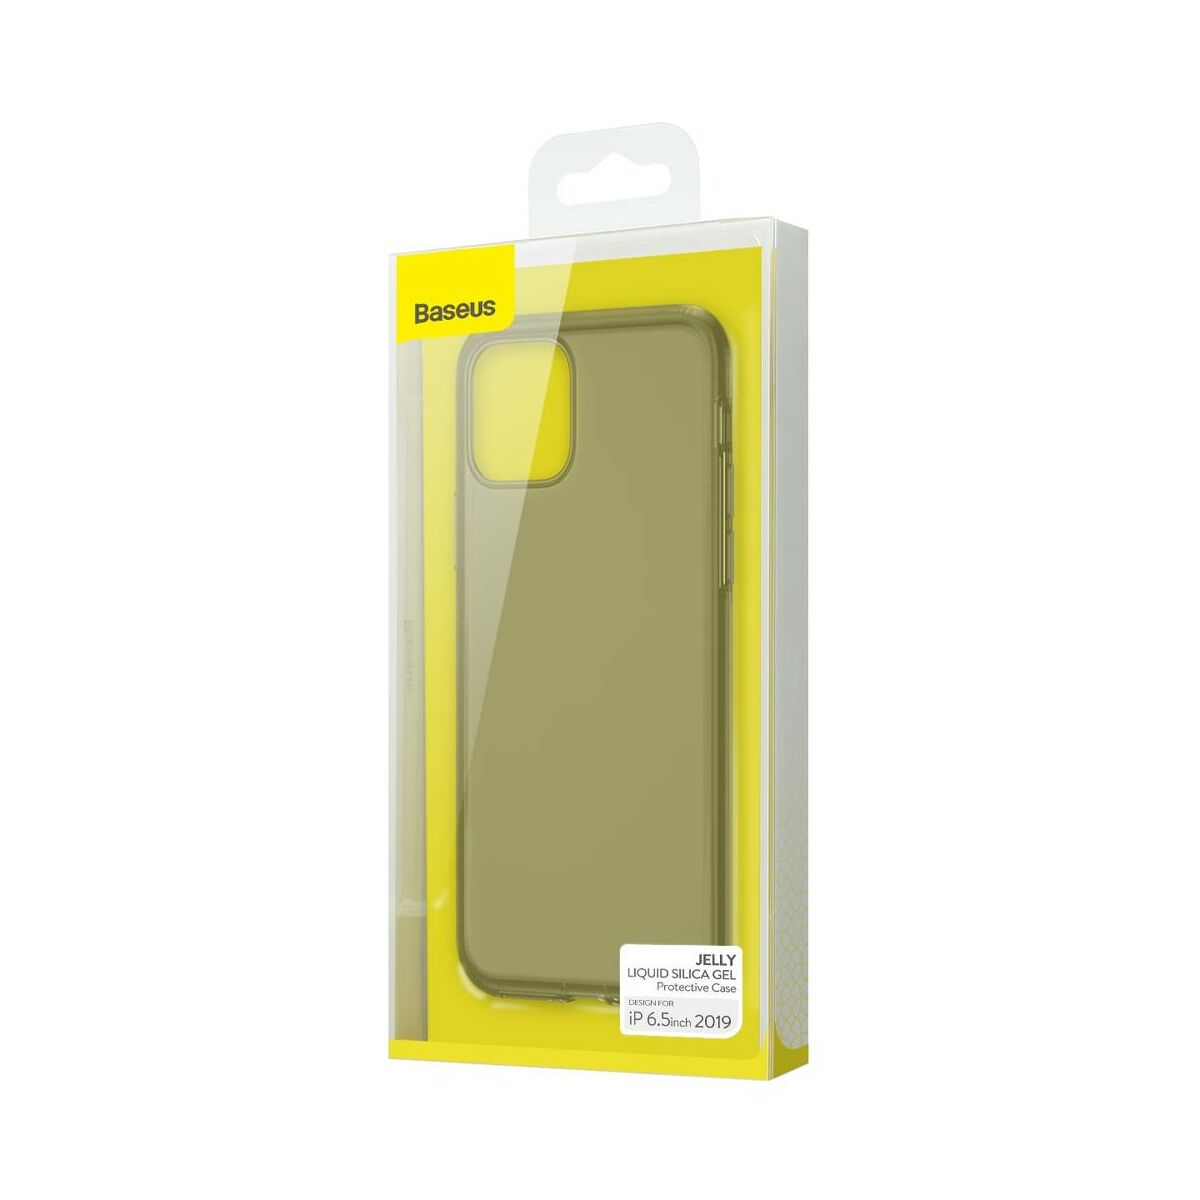 Kép 1/12 - Baseus iPhone 11 Pro Max tok, Jelly Liquid Silica Gel Protective, átlátszó fekete (WIAPIPH65S-GD01)